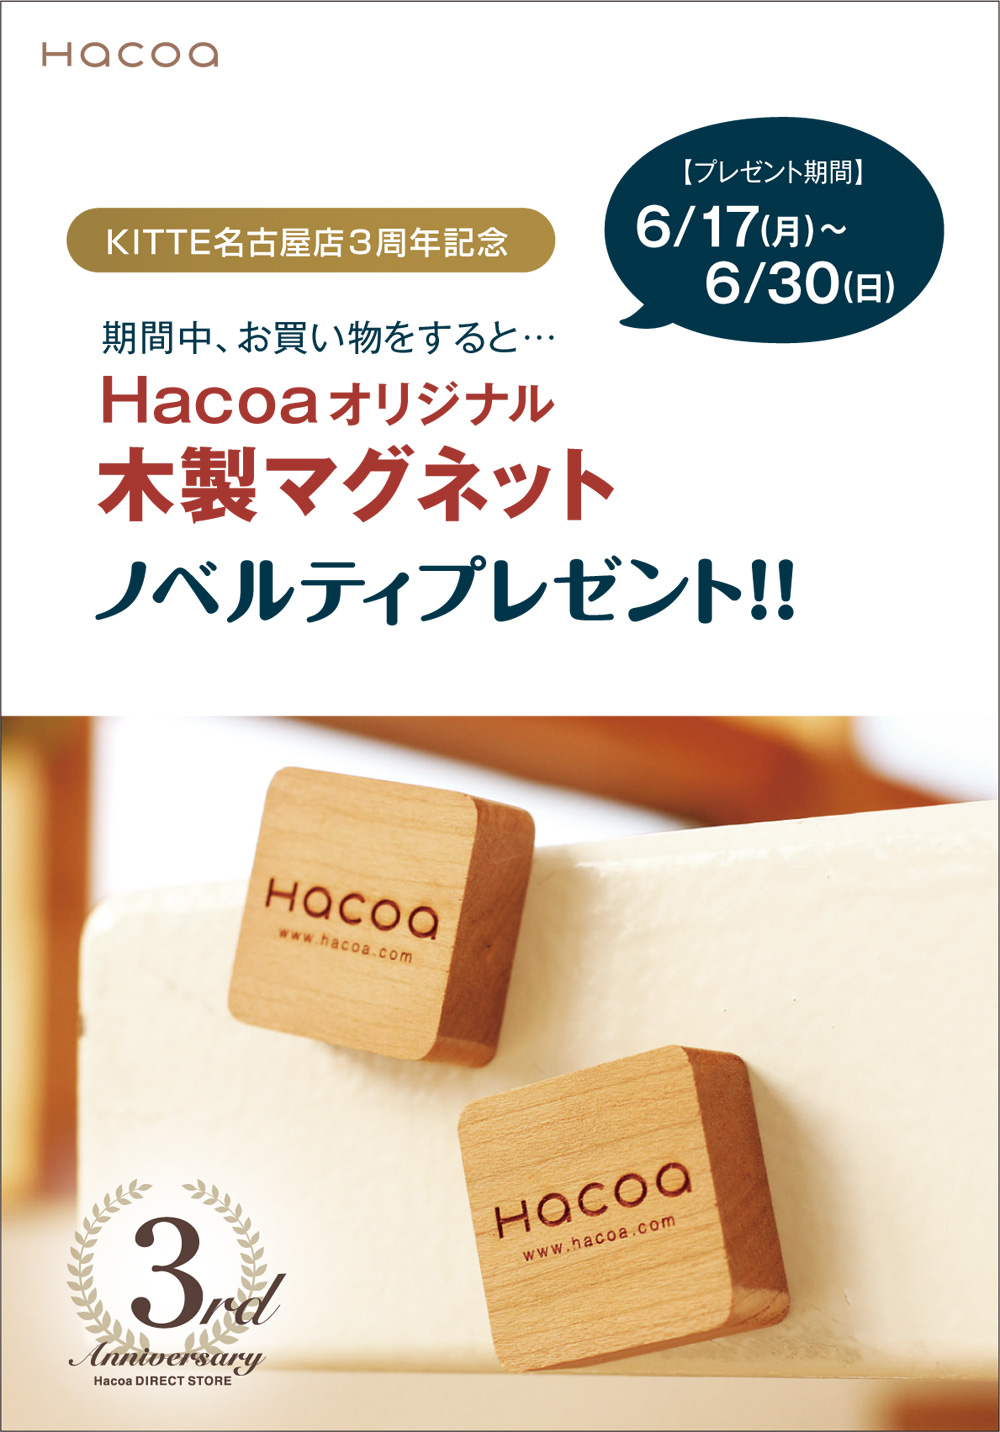 Kitte名古屋店 3周年記念キャンペーンを開催いたします 木製雑貨店 Hacoaダイレクトストア